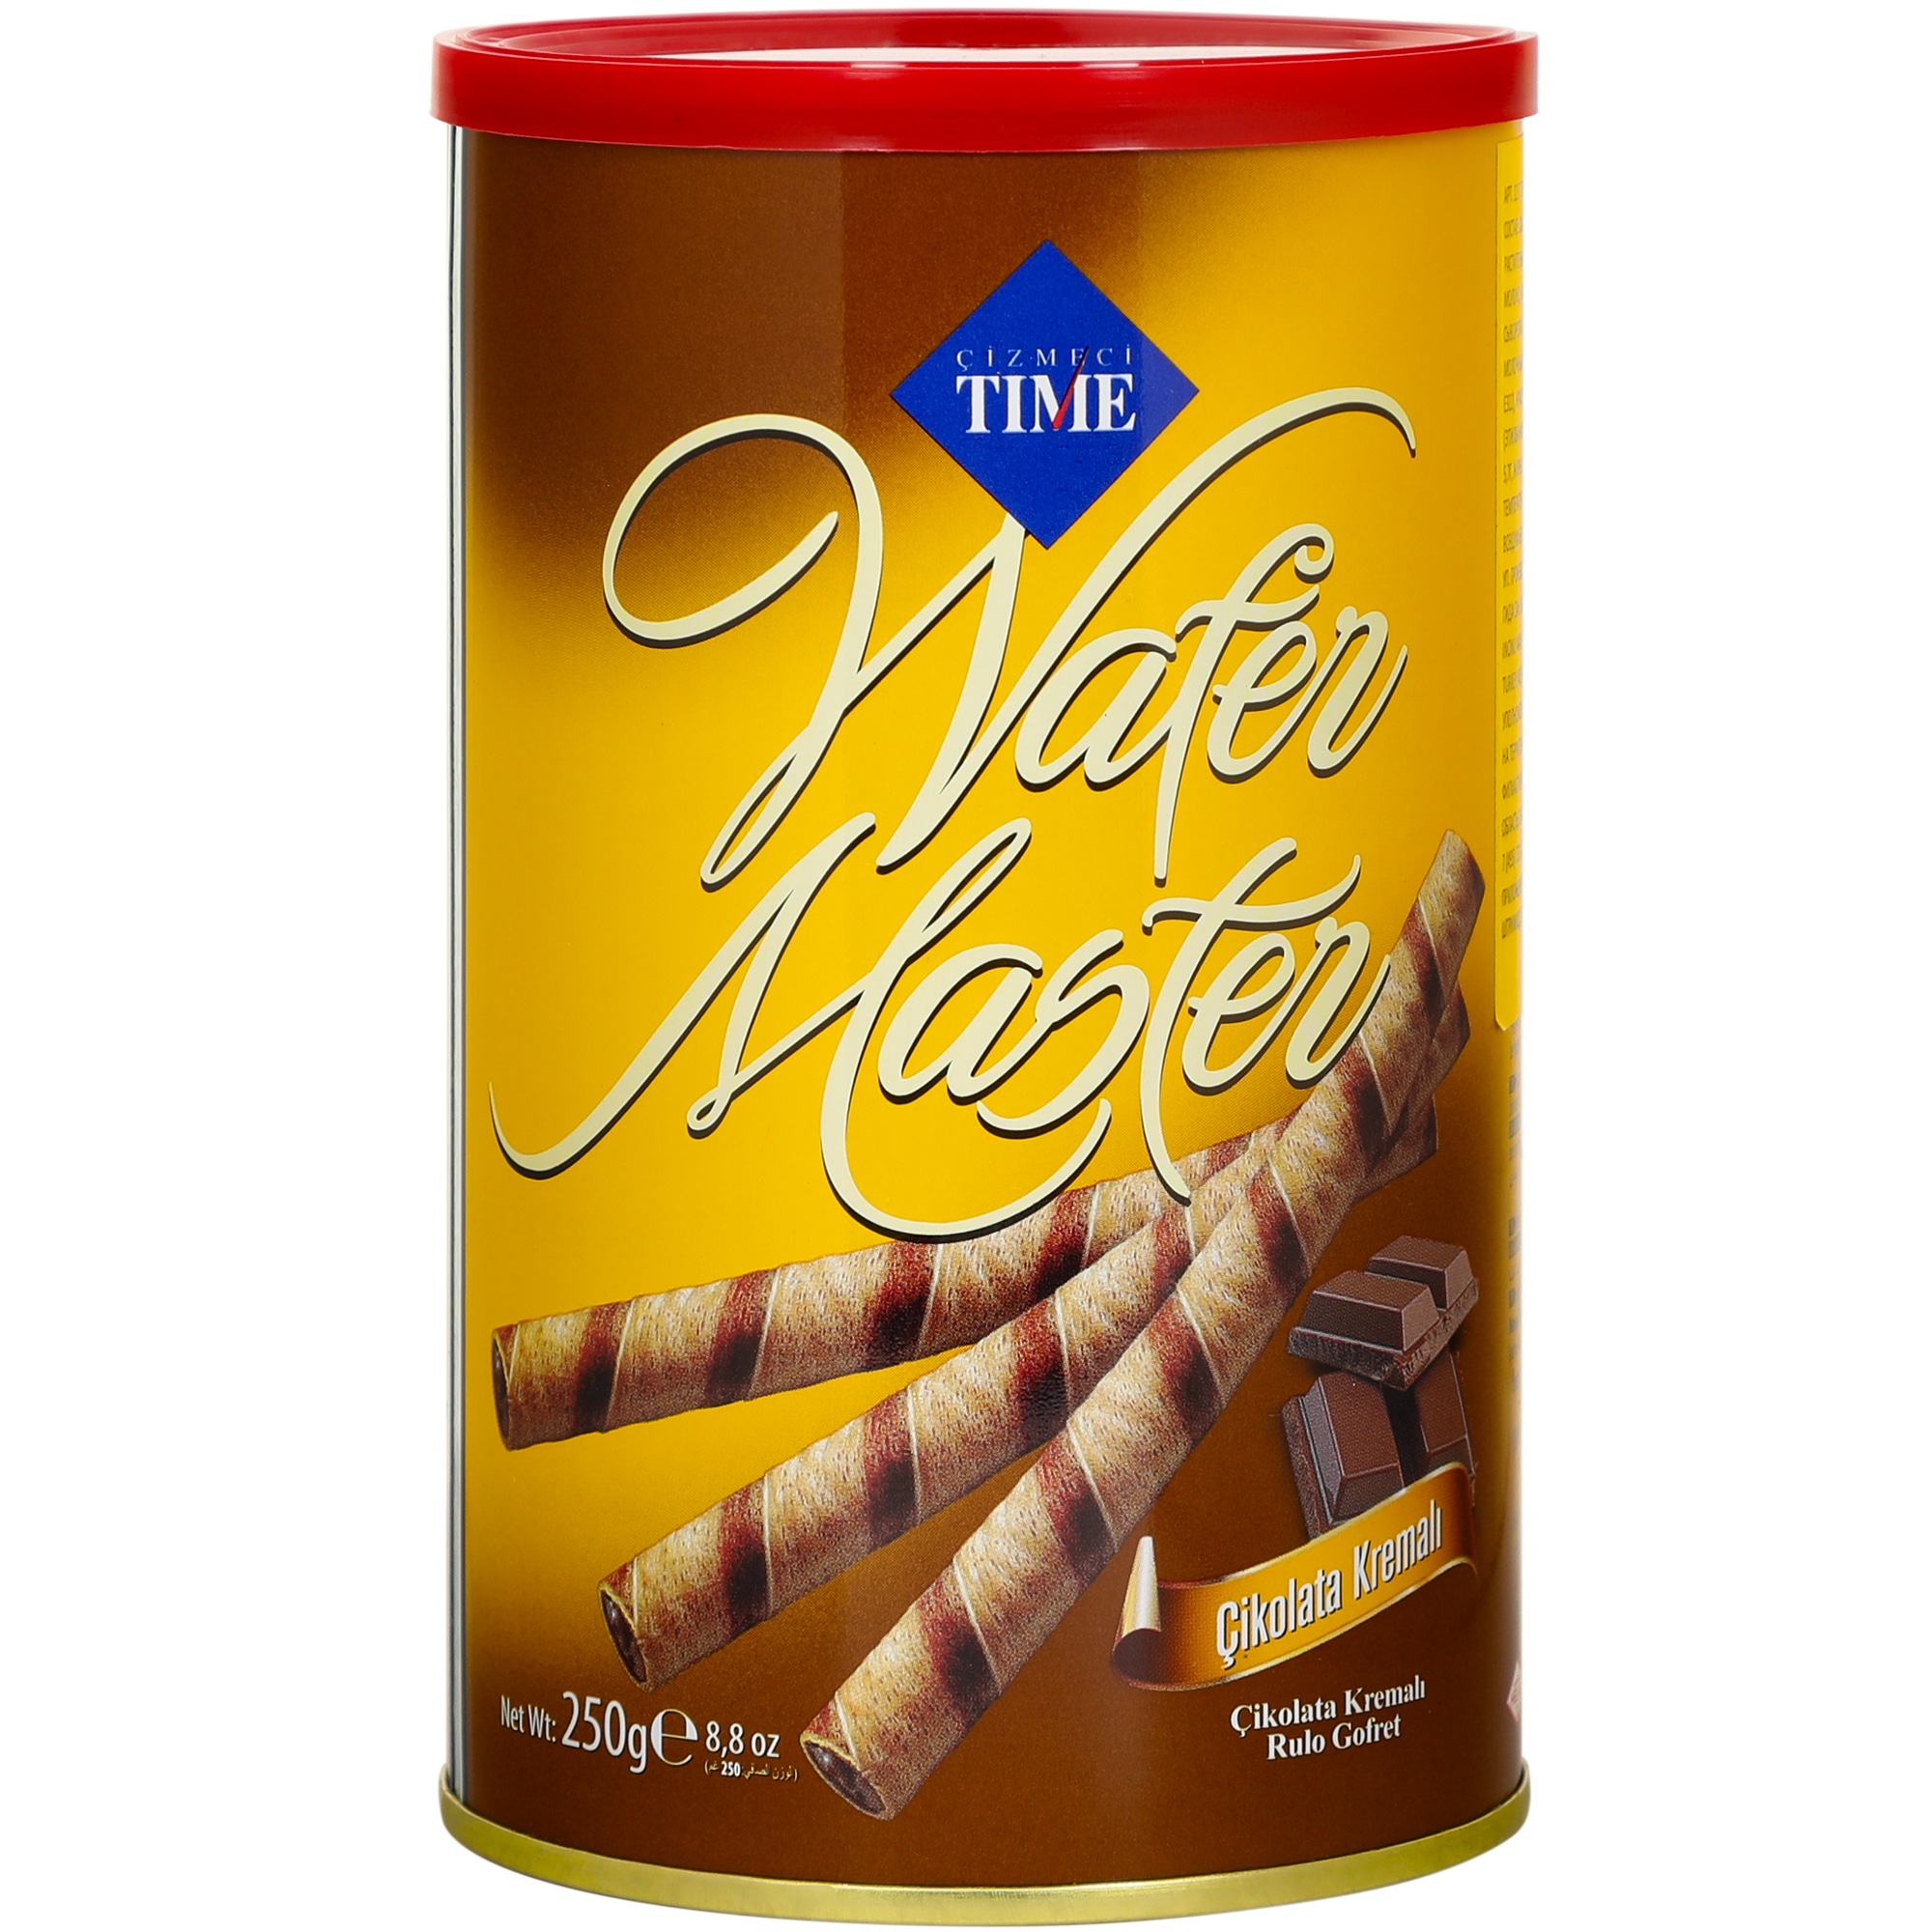 Трубочки Cizmeci Time вафельные wafer master шоколад, 250 г